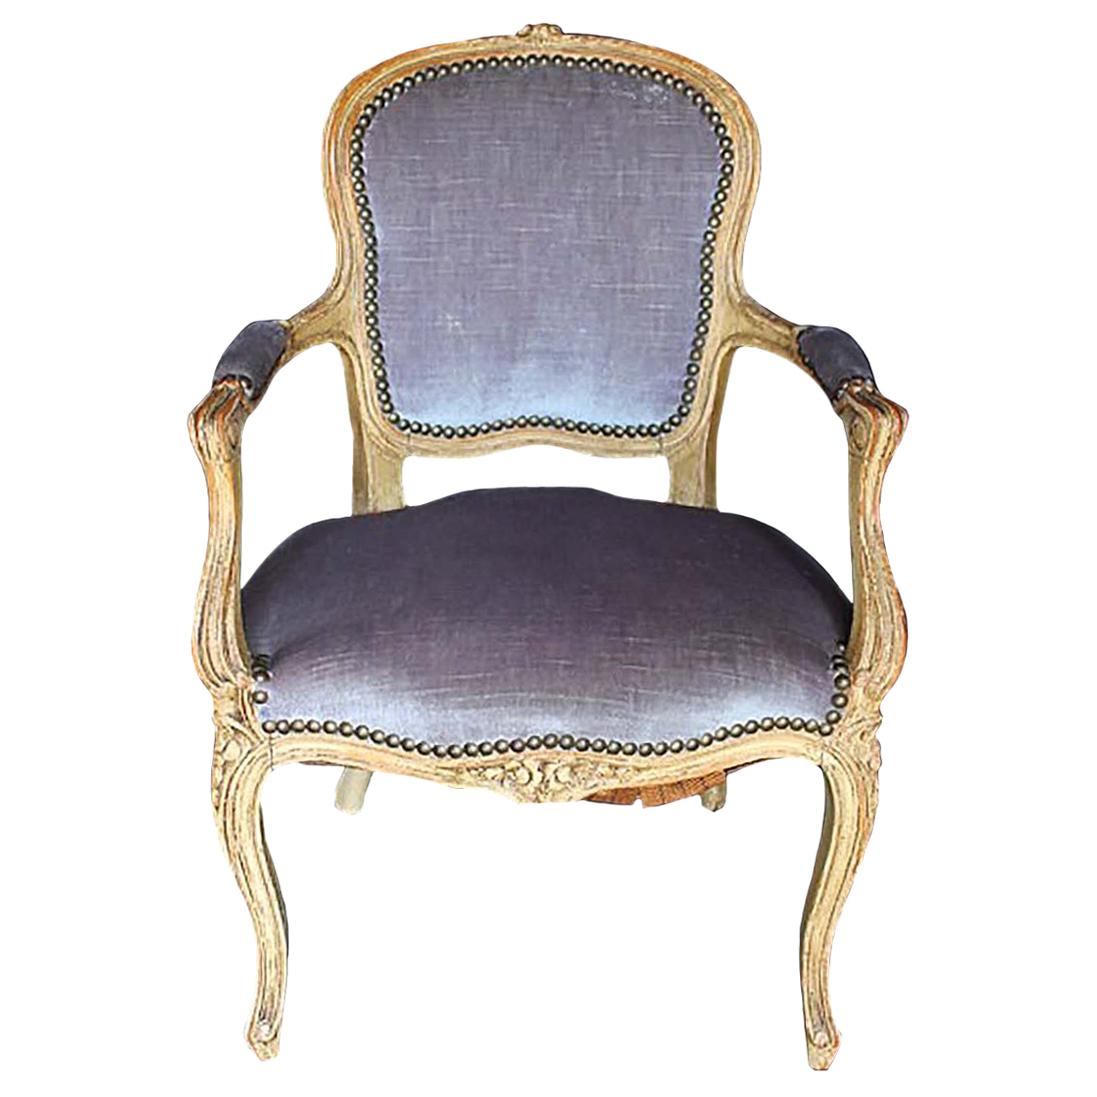 Antique 19th Century Louis XVI Wooden Child's Chair